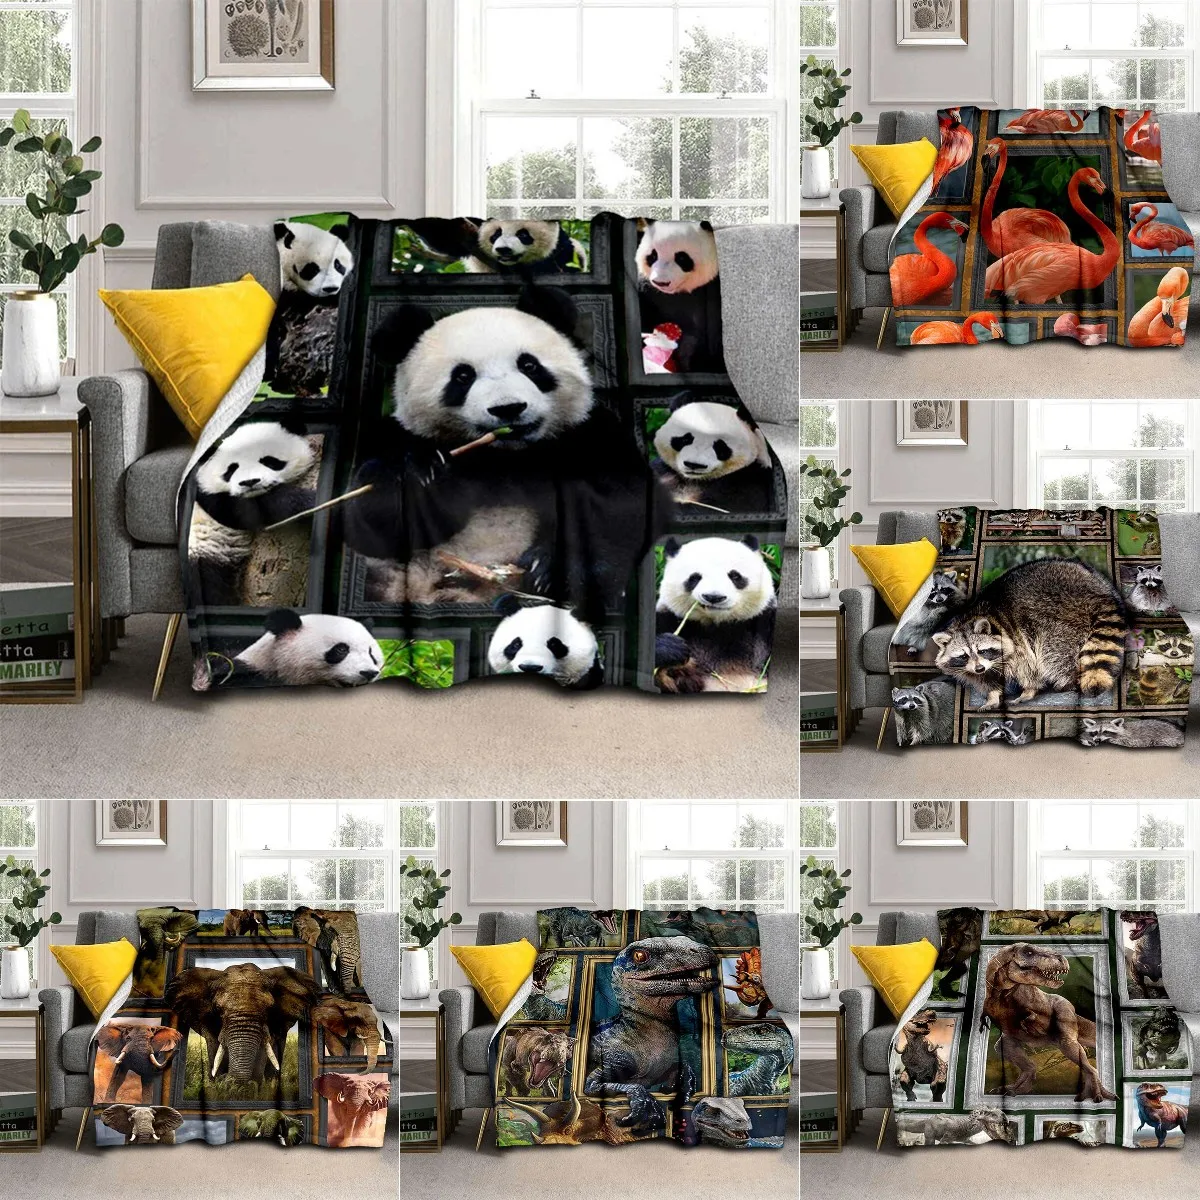 

Wild Animals Pandas Flamingo Flannel Throw Blanket Super Soft Fleece Blanket All Seasons Warm for Couch Sofa Bedroom King Size